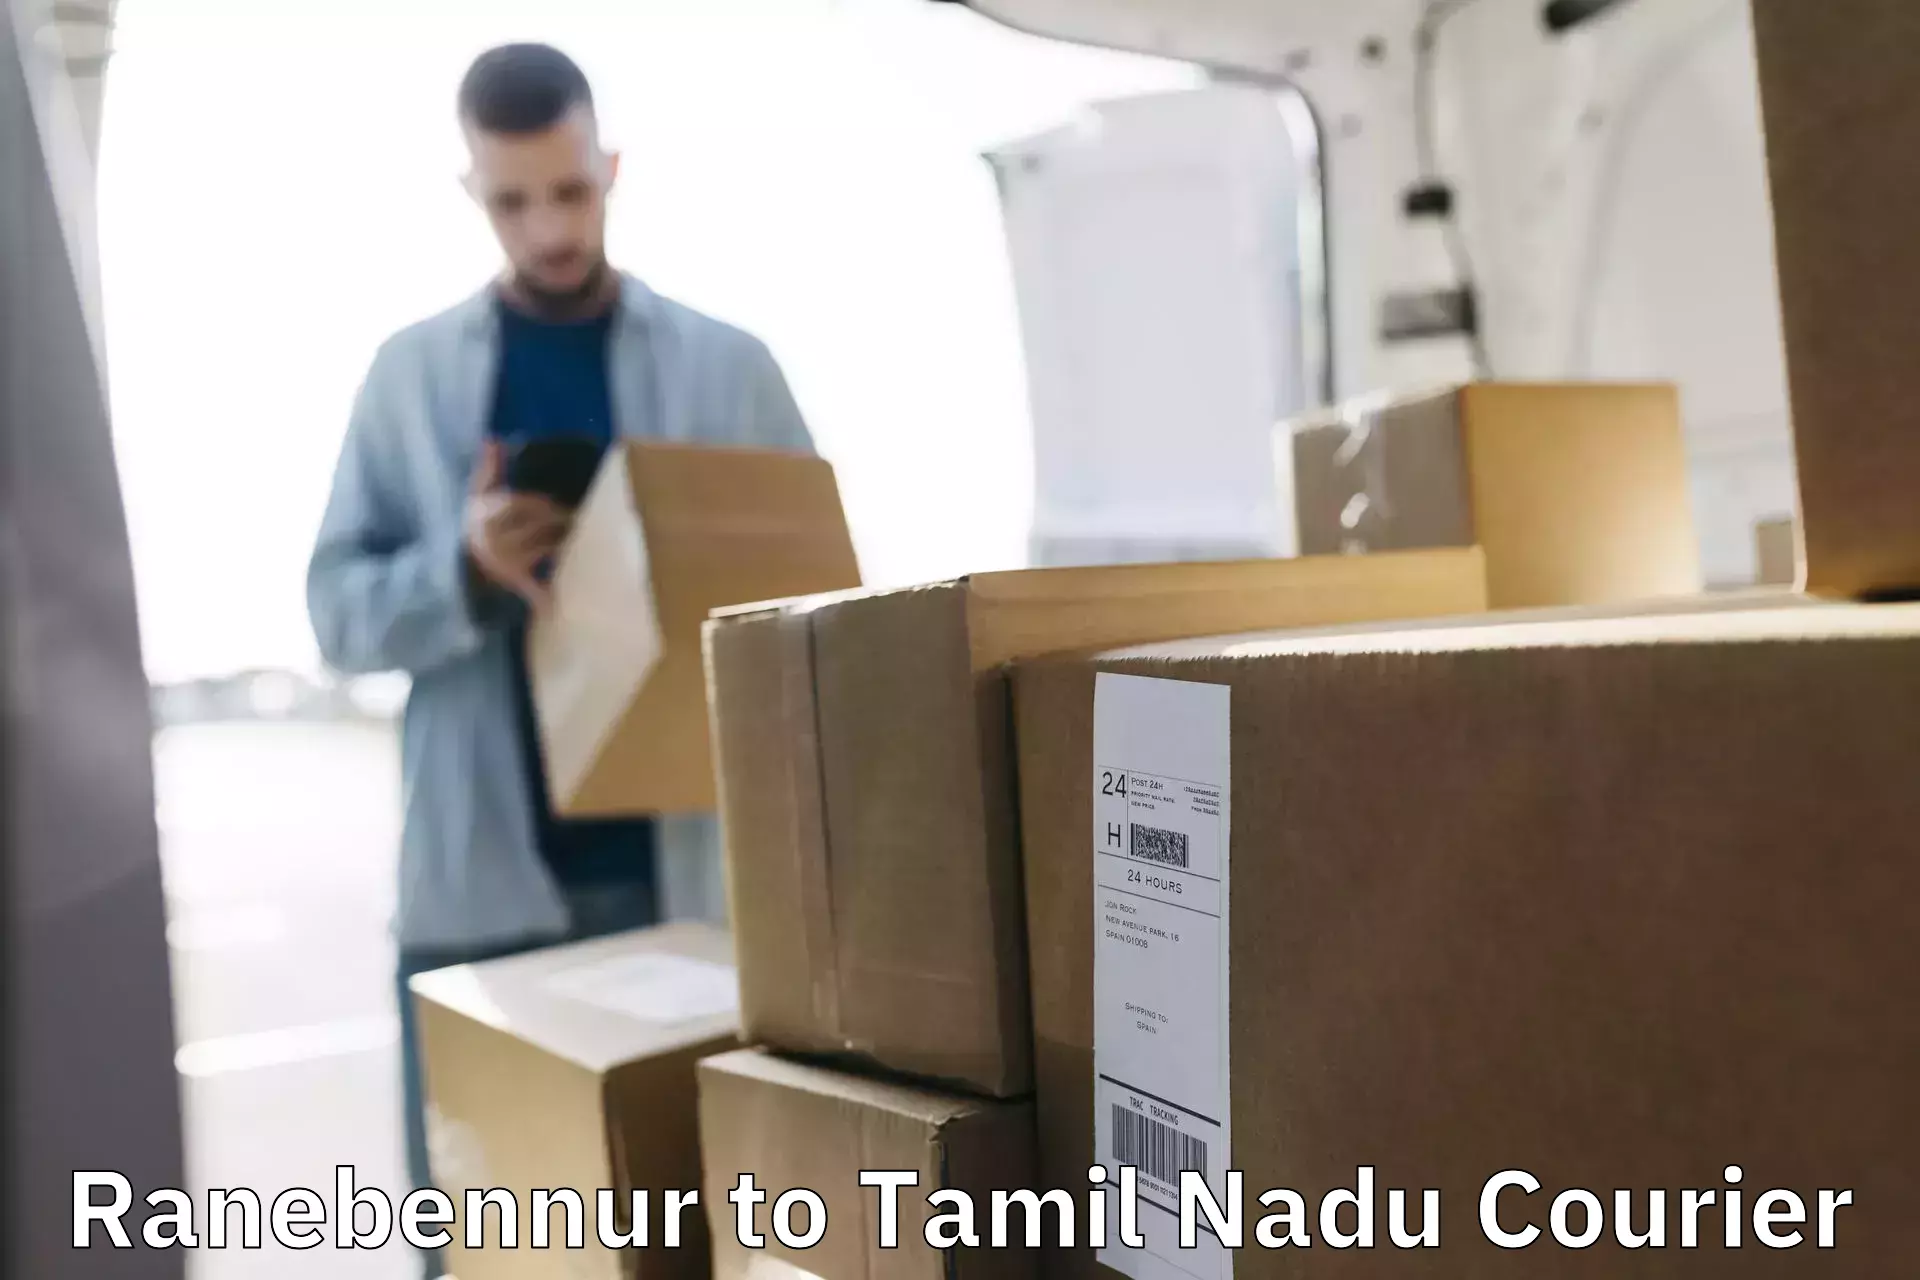 Same-day delivery solutions Ranebennur to Chennai